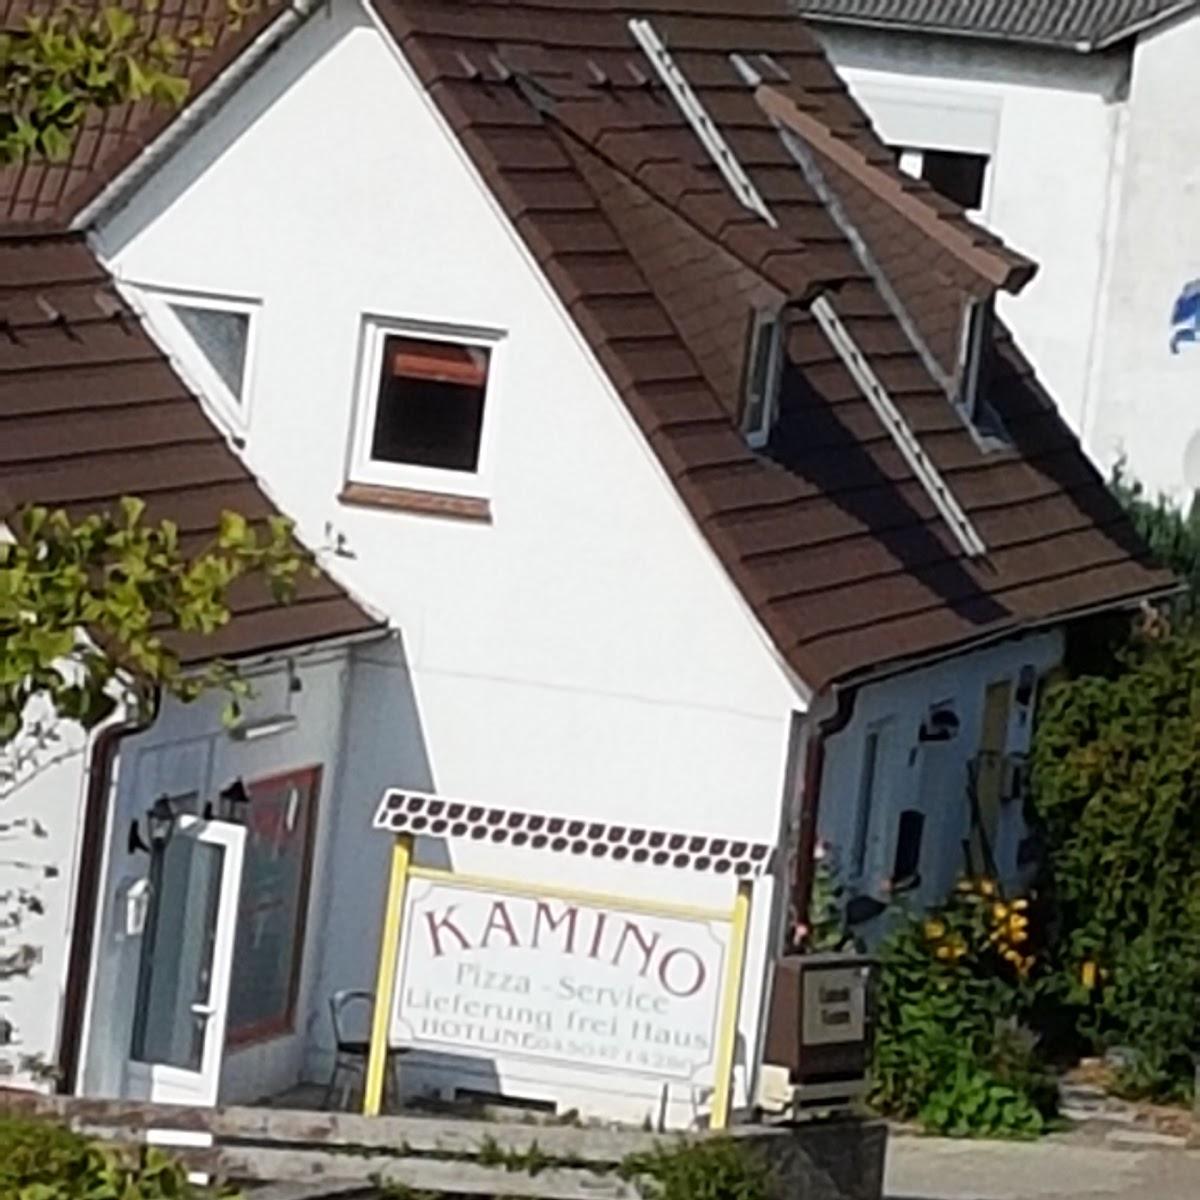 Restaurant "Kamino Pizza-Service" in Ratekau